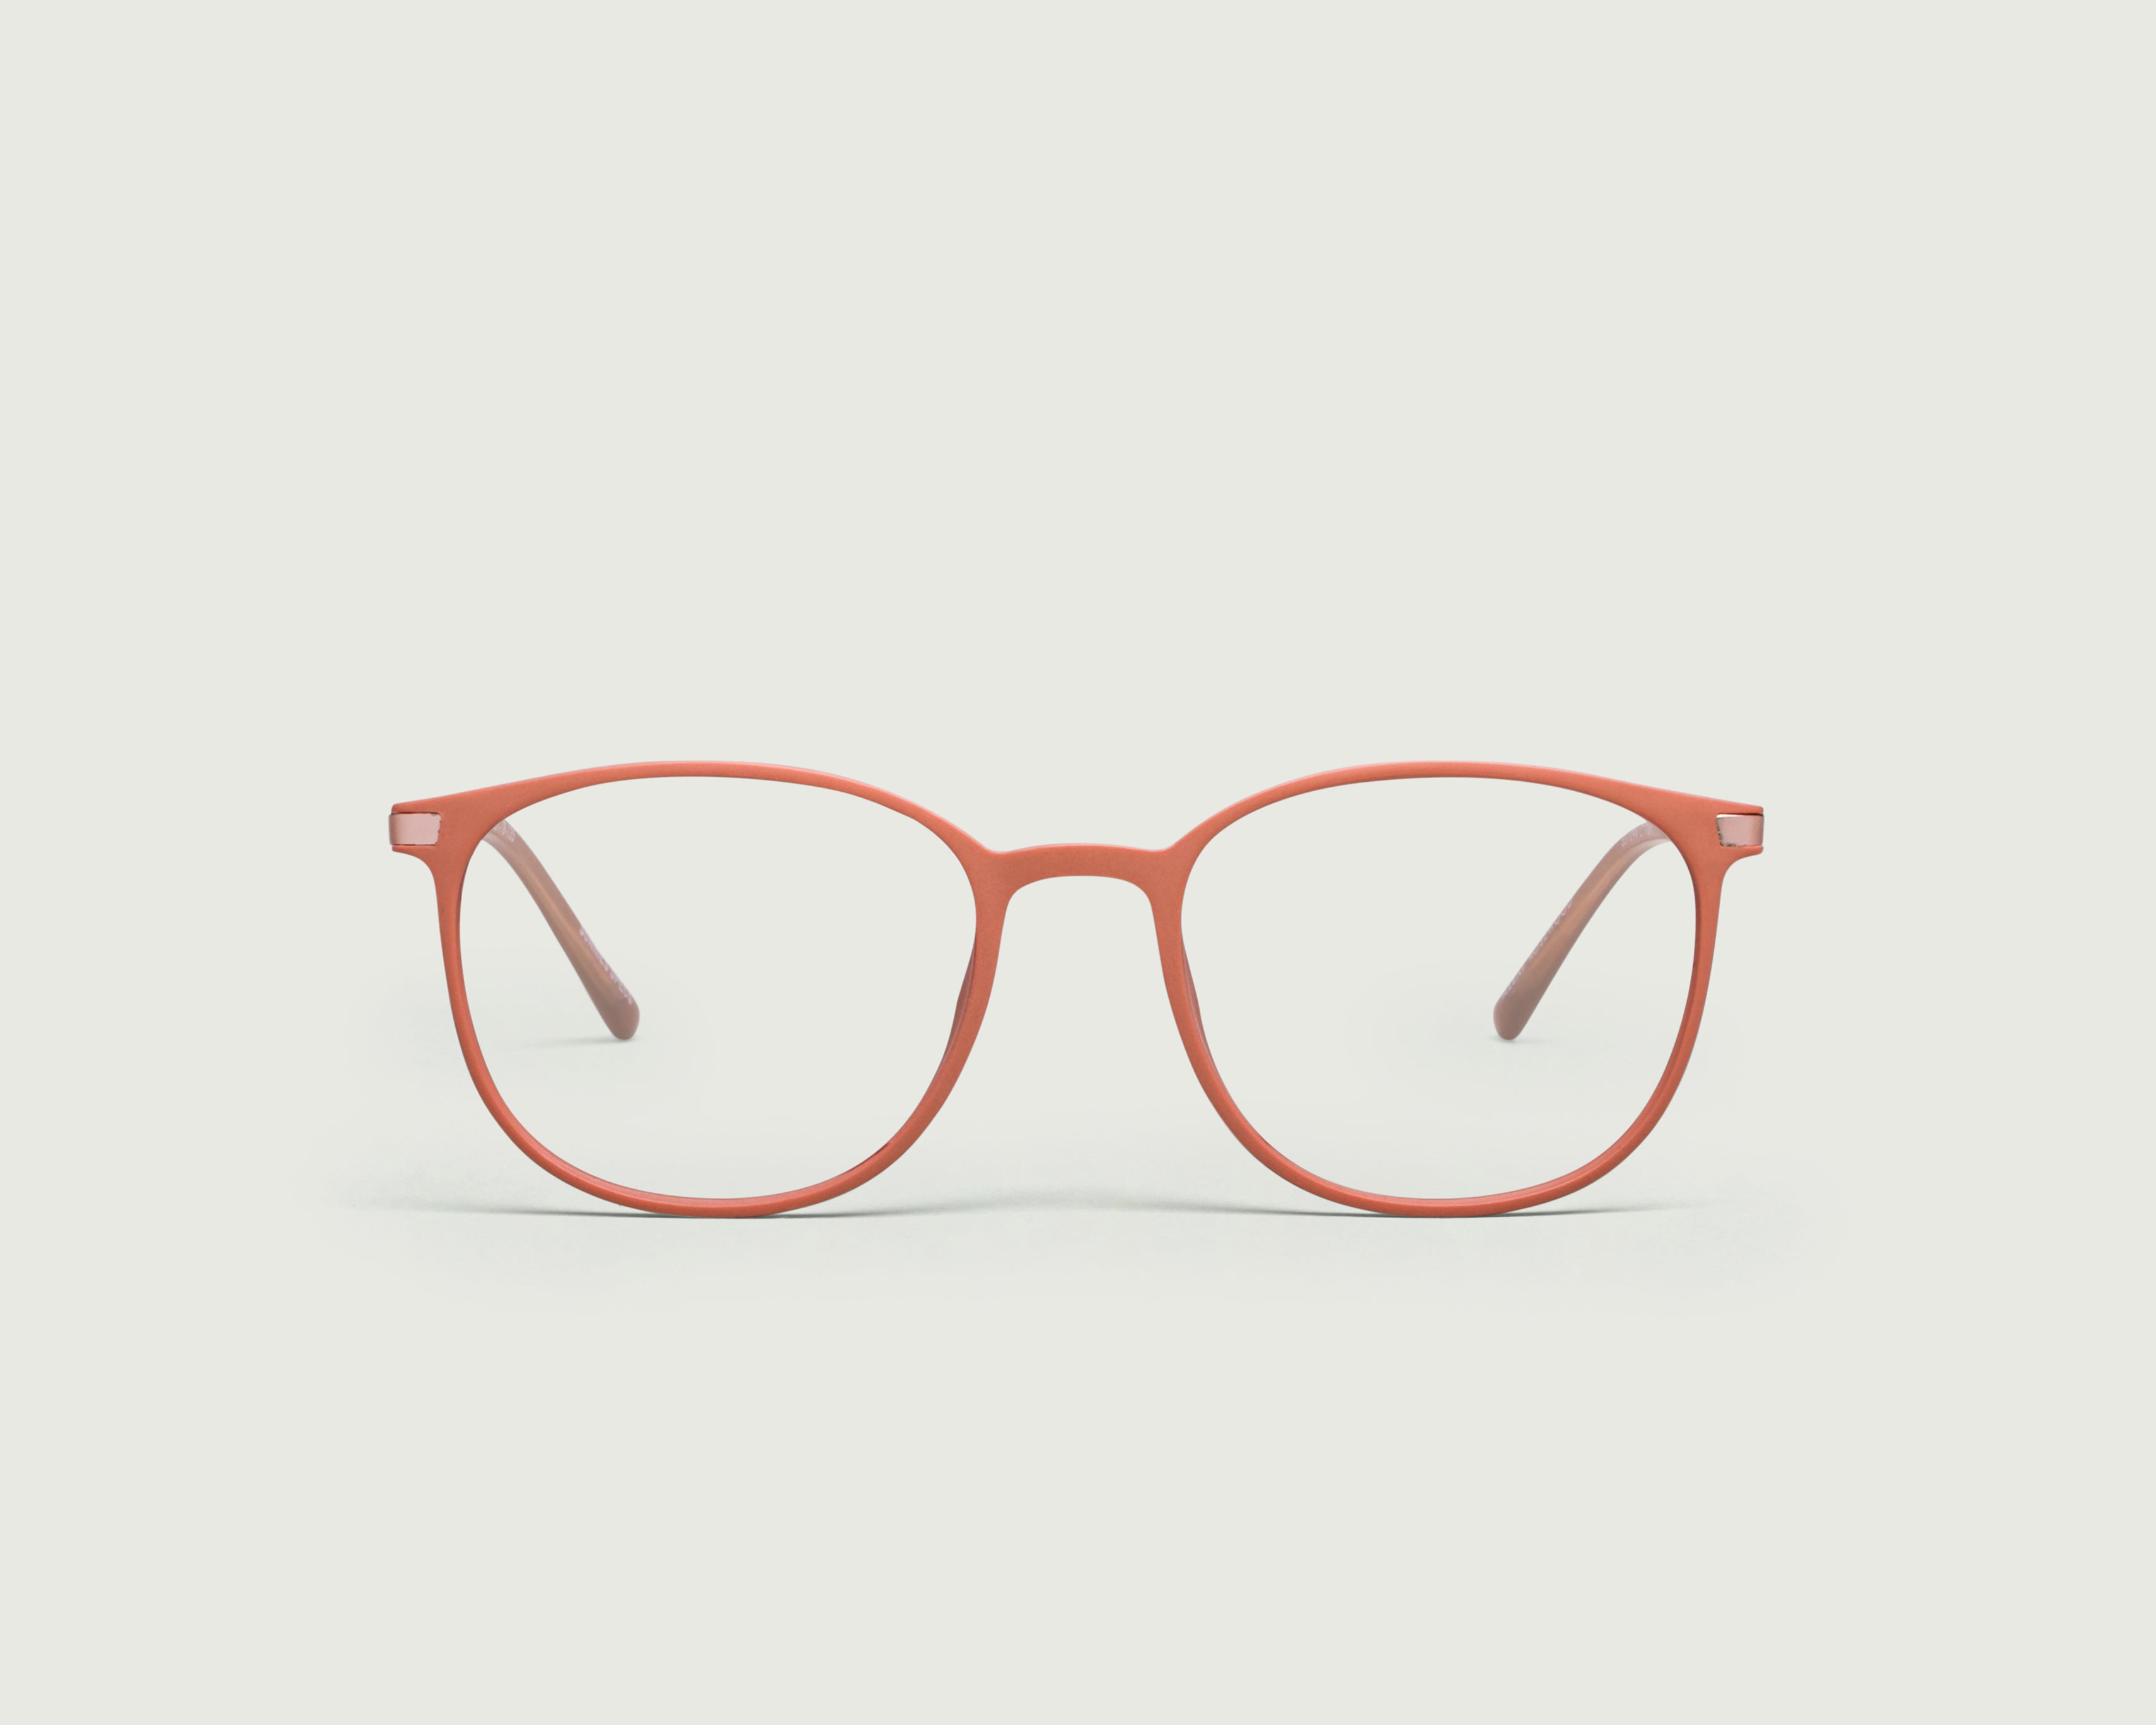 Rosewood::Alexi Eyeglasses round orange plastic front (4687757770806)